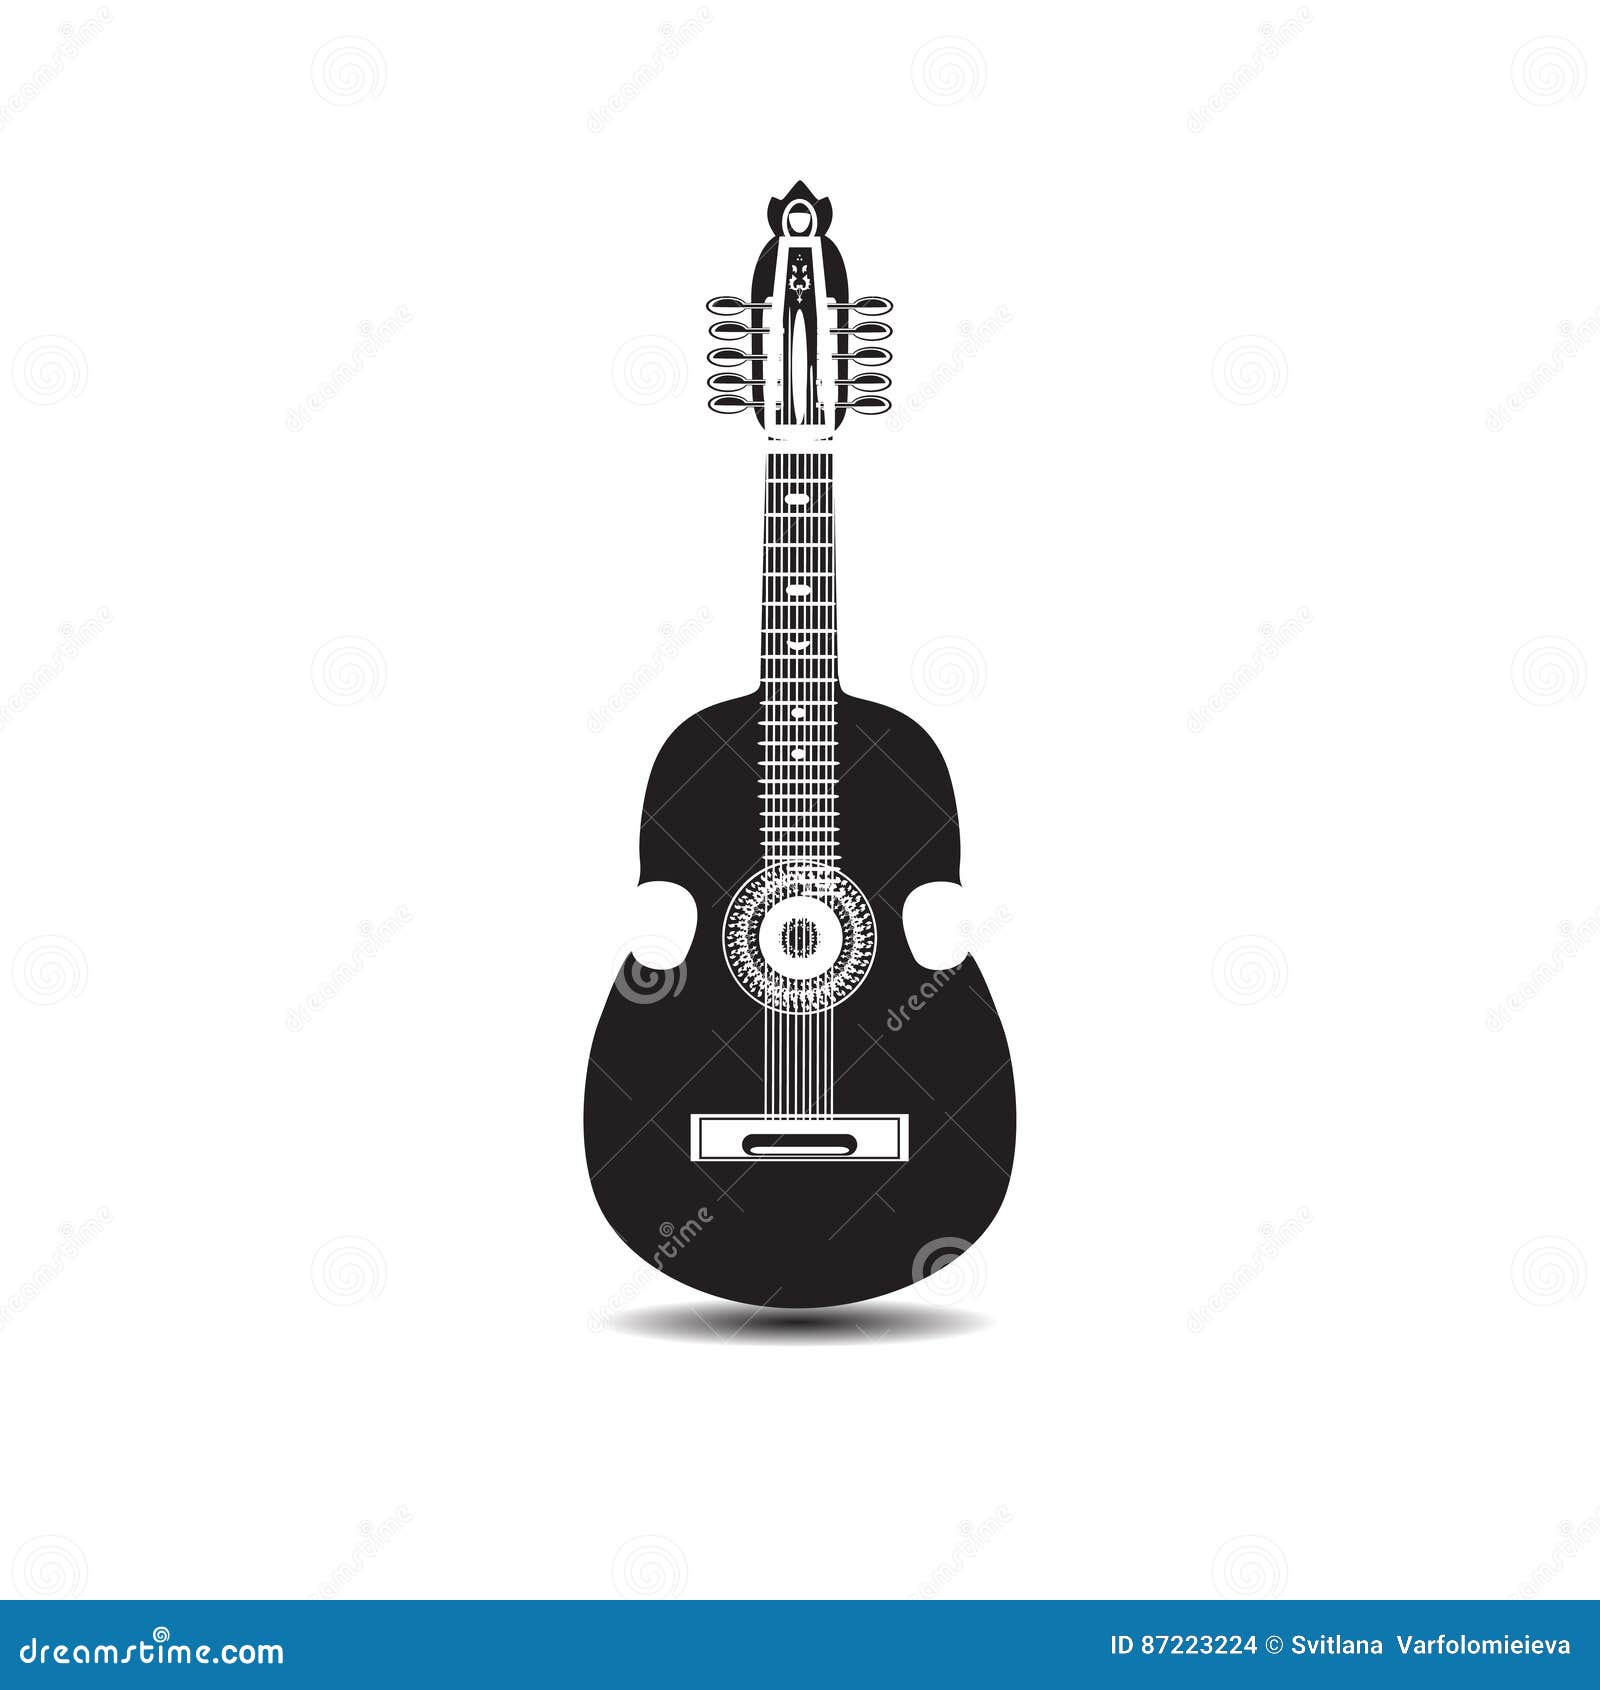   of cuatro, latin american black and white guitar